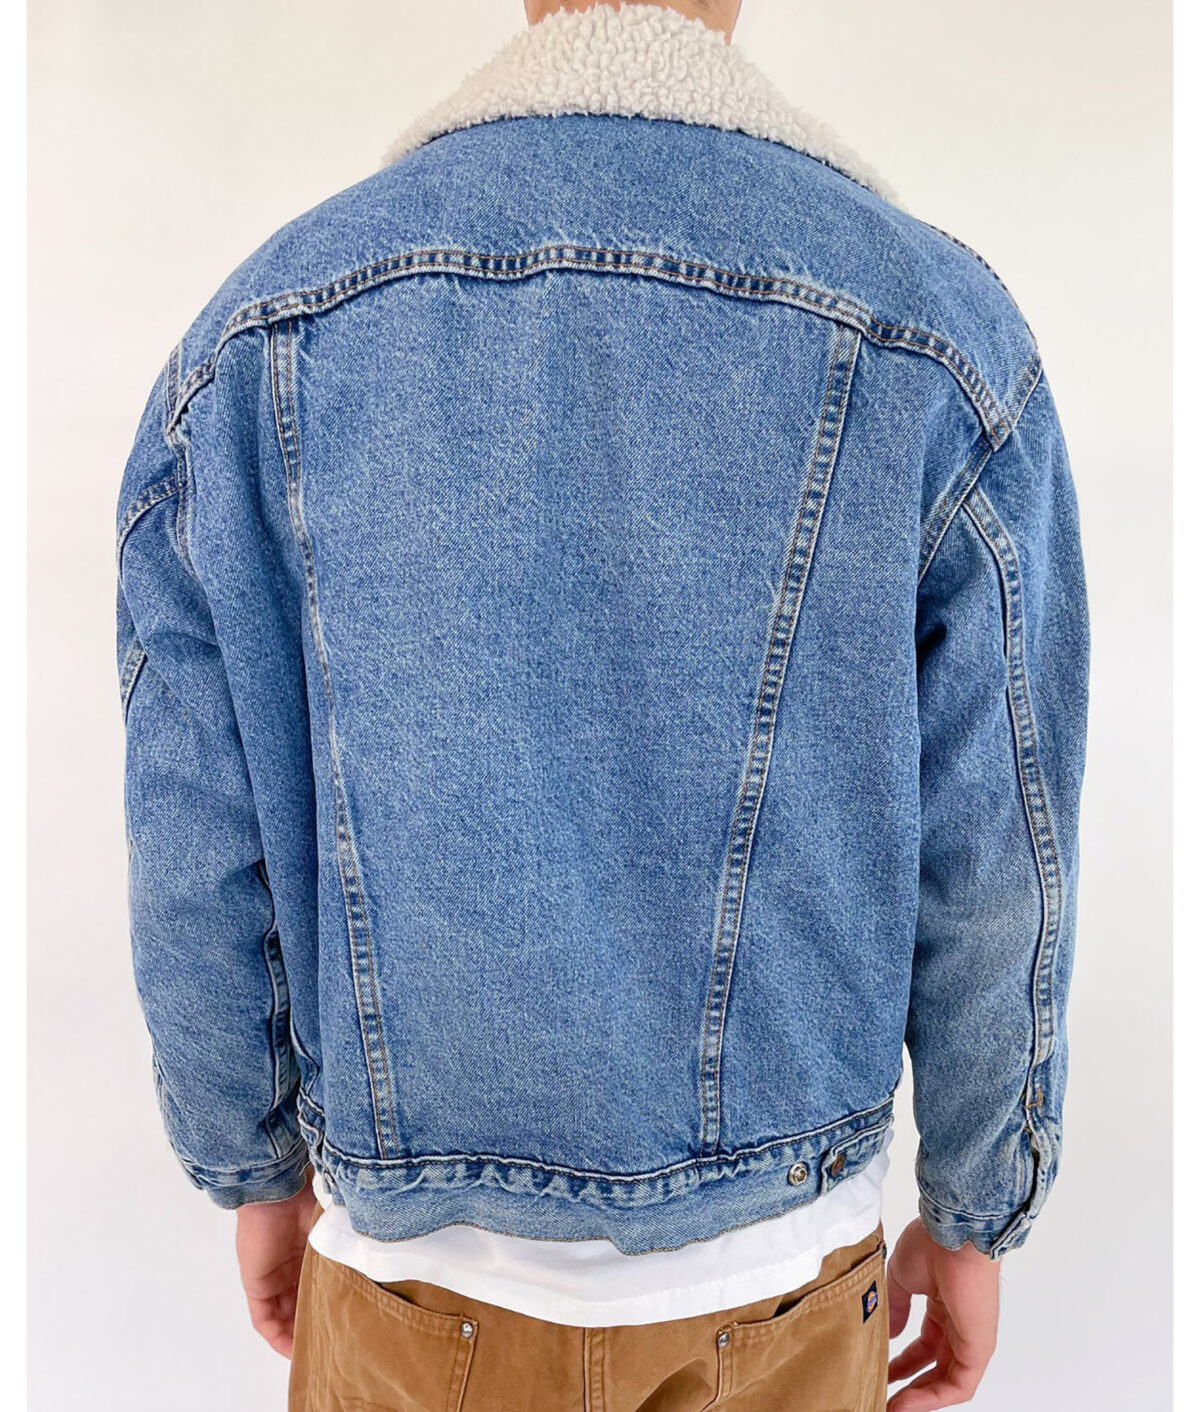 Troye Sivan Oversized Denim Jacket